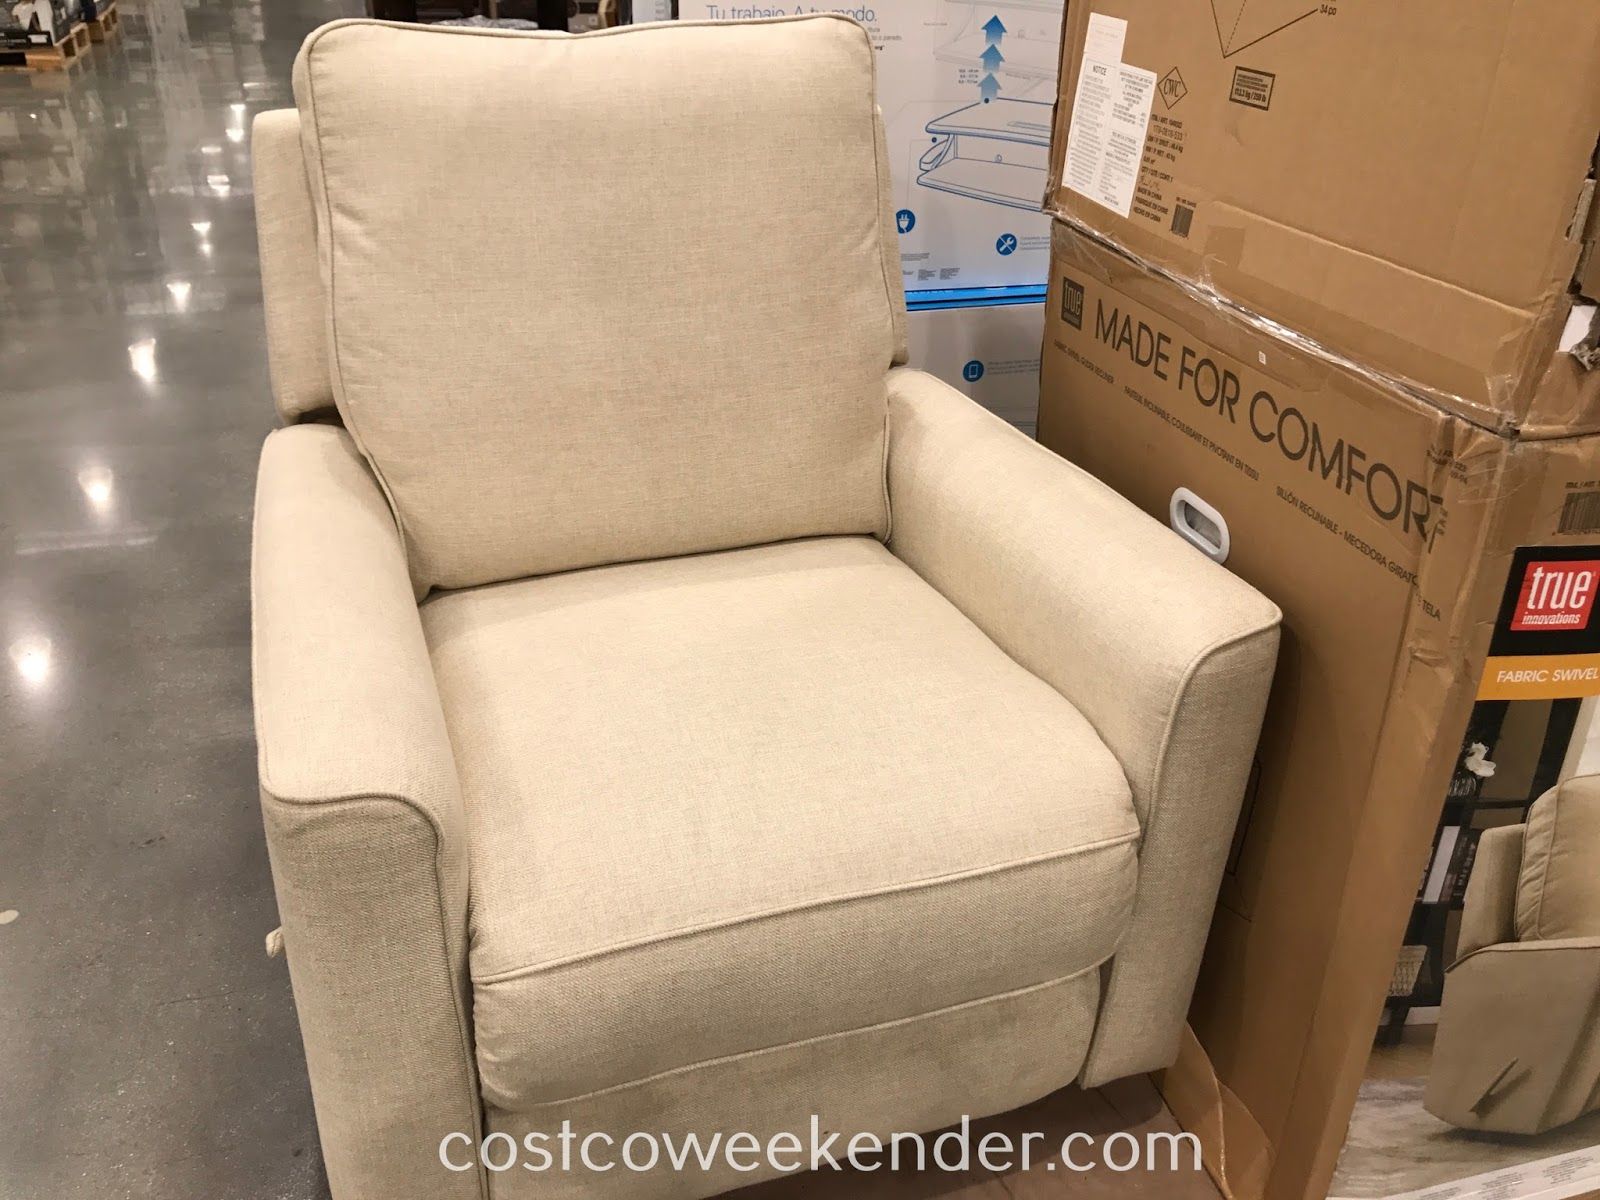 True Innovations Fabric Swivel Glider Recliner Chair | Costco Weekender With Regard To Decker Ii Fabric Swivel Rocker Recliners (View 13 of 25)